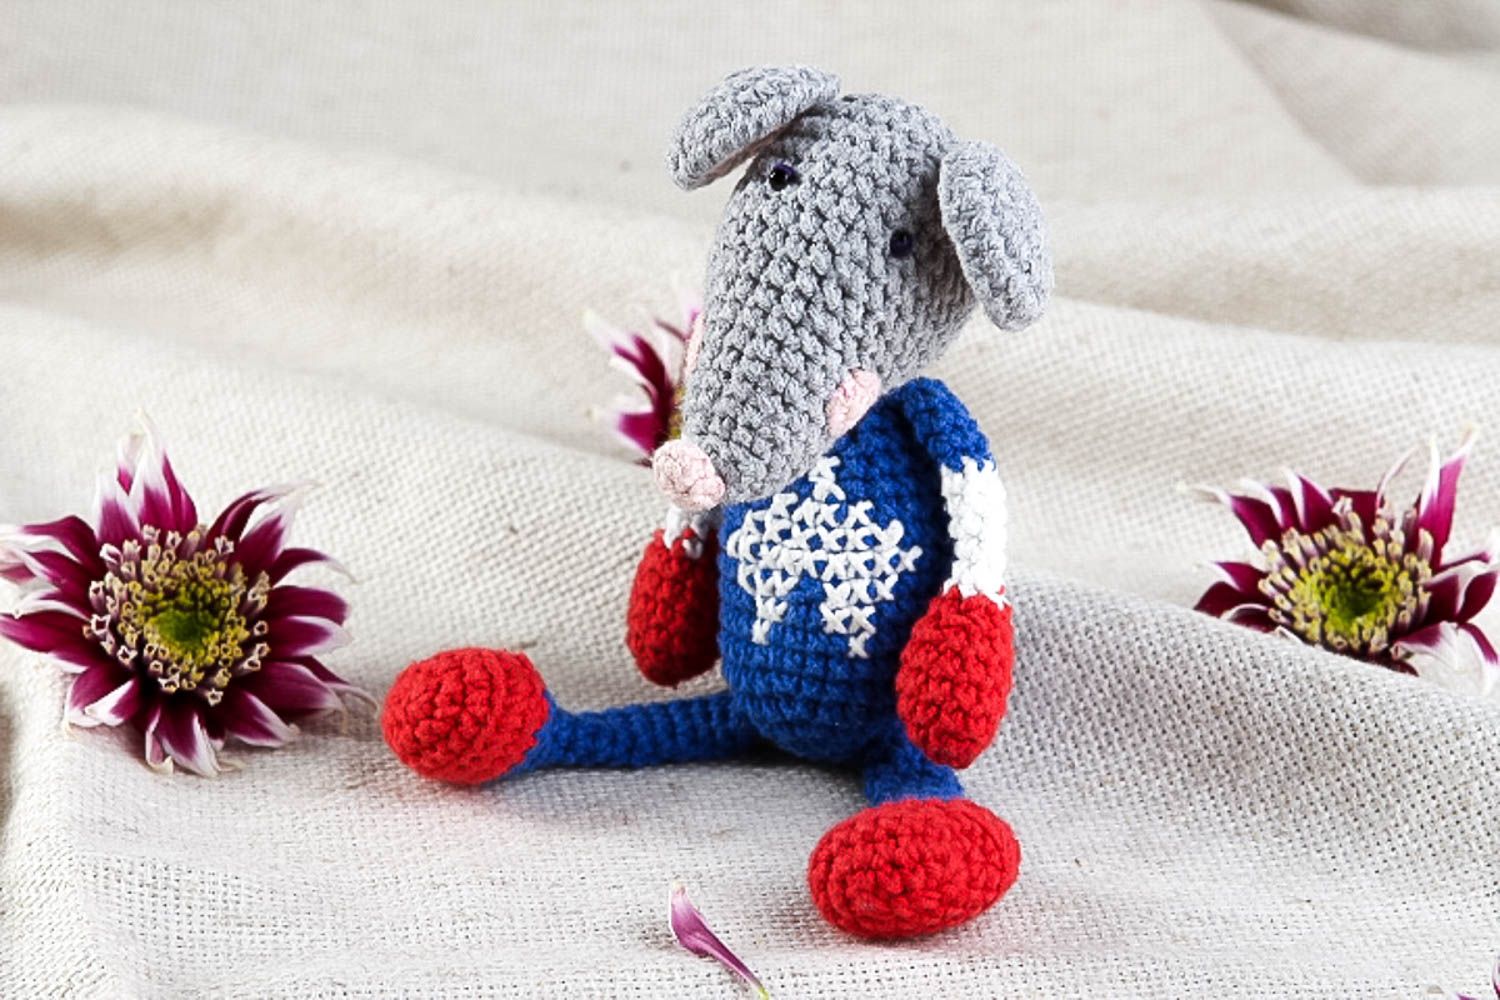 Handmade crocheted toy for children crocheted doll nursery decor ideas photo 1